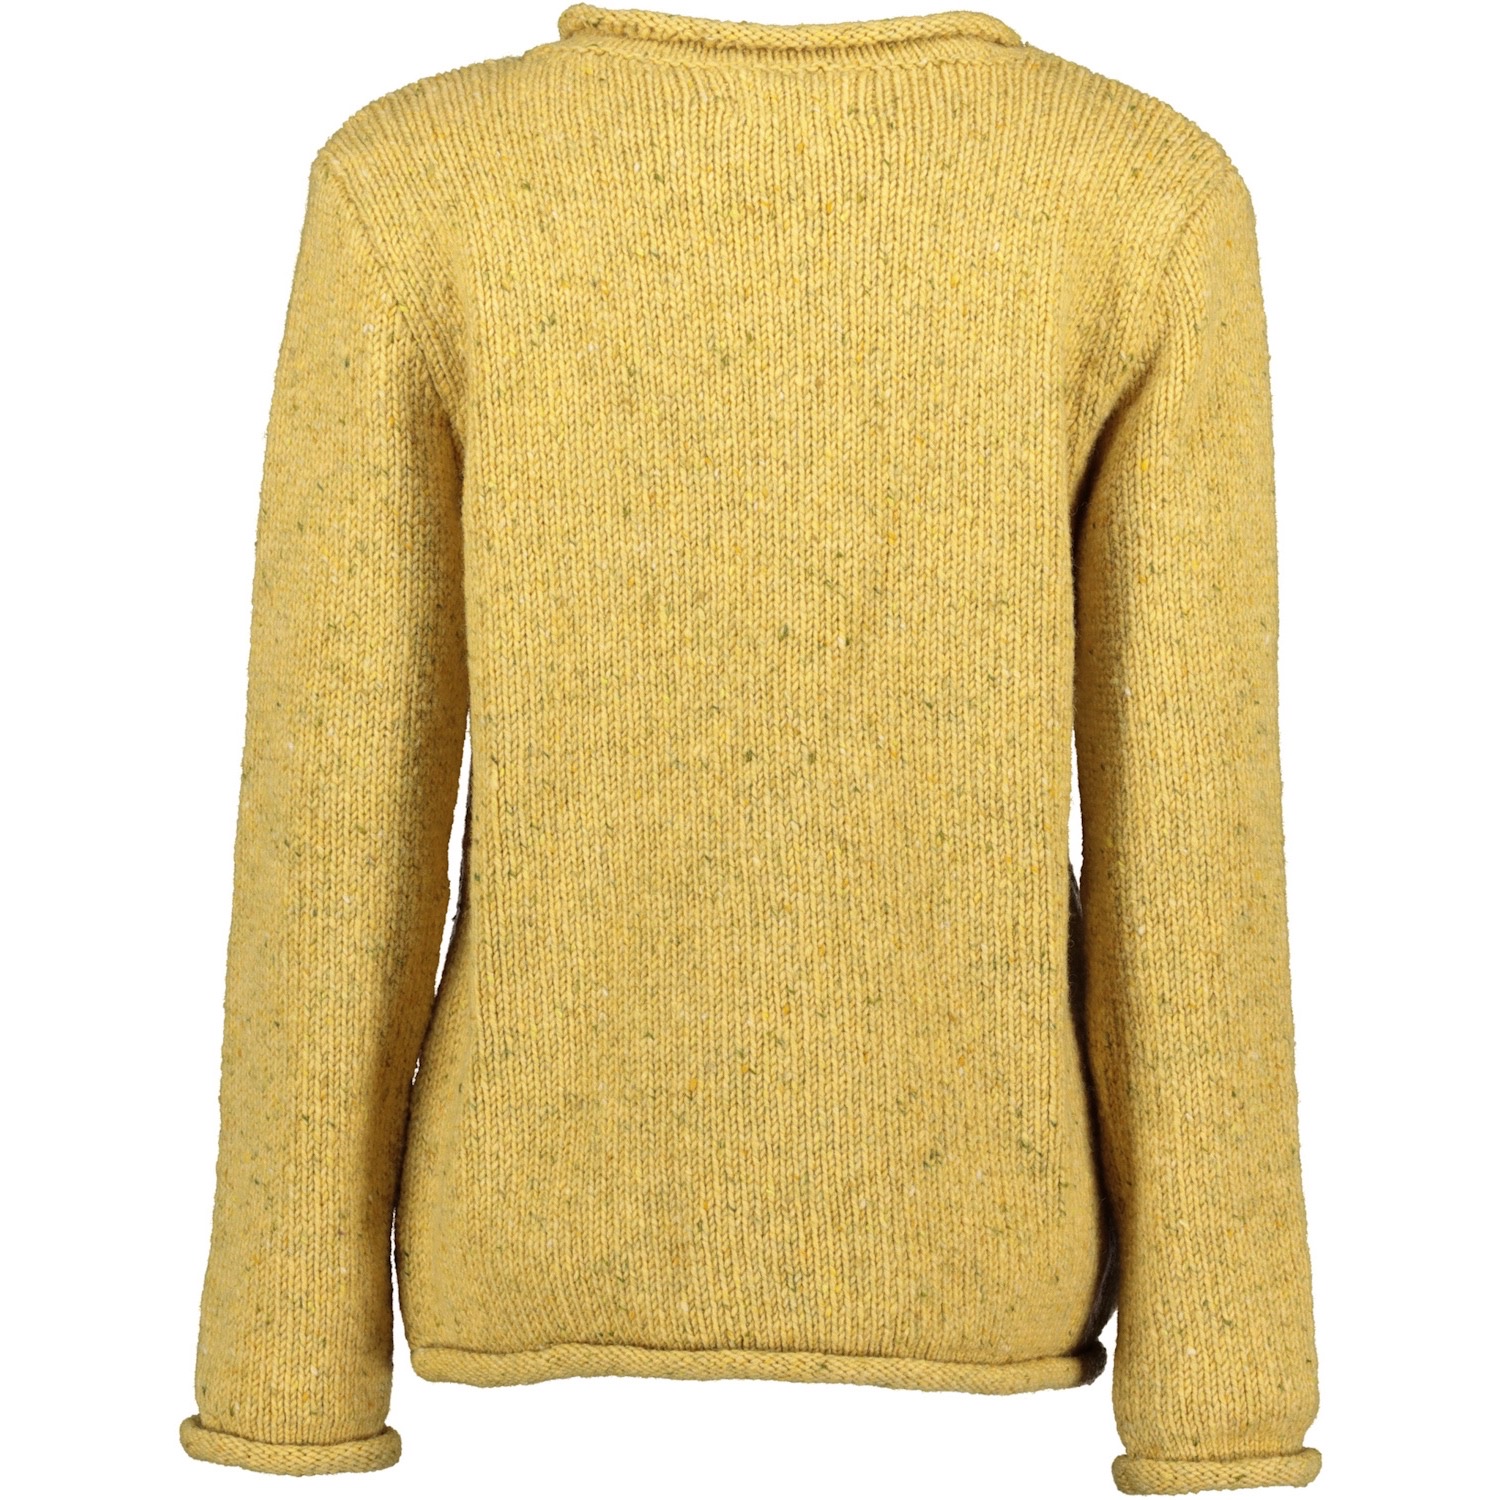 Killaloe Tweed Roll Neck Sweater - Lemon